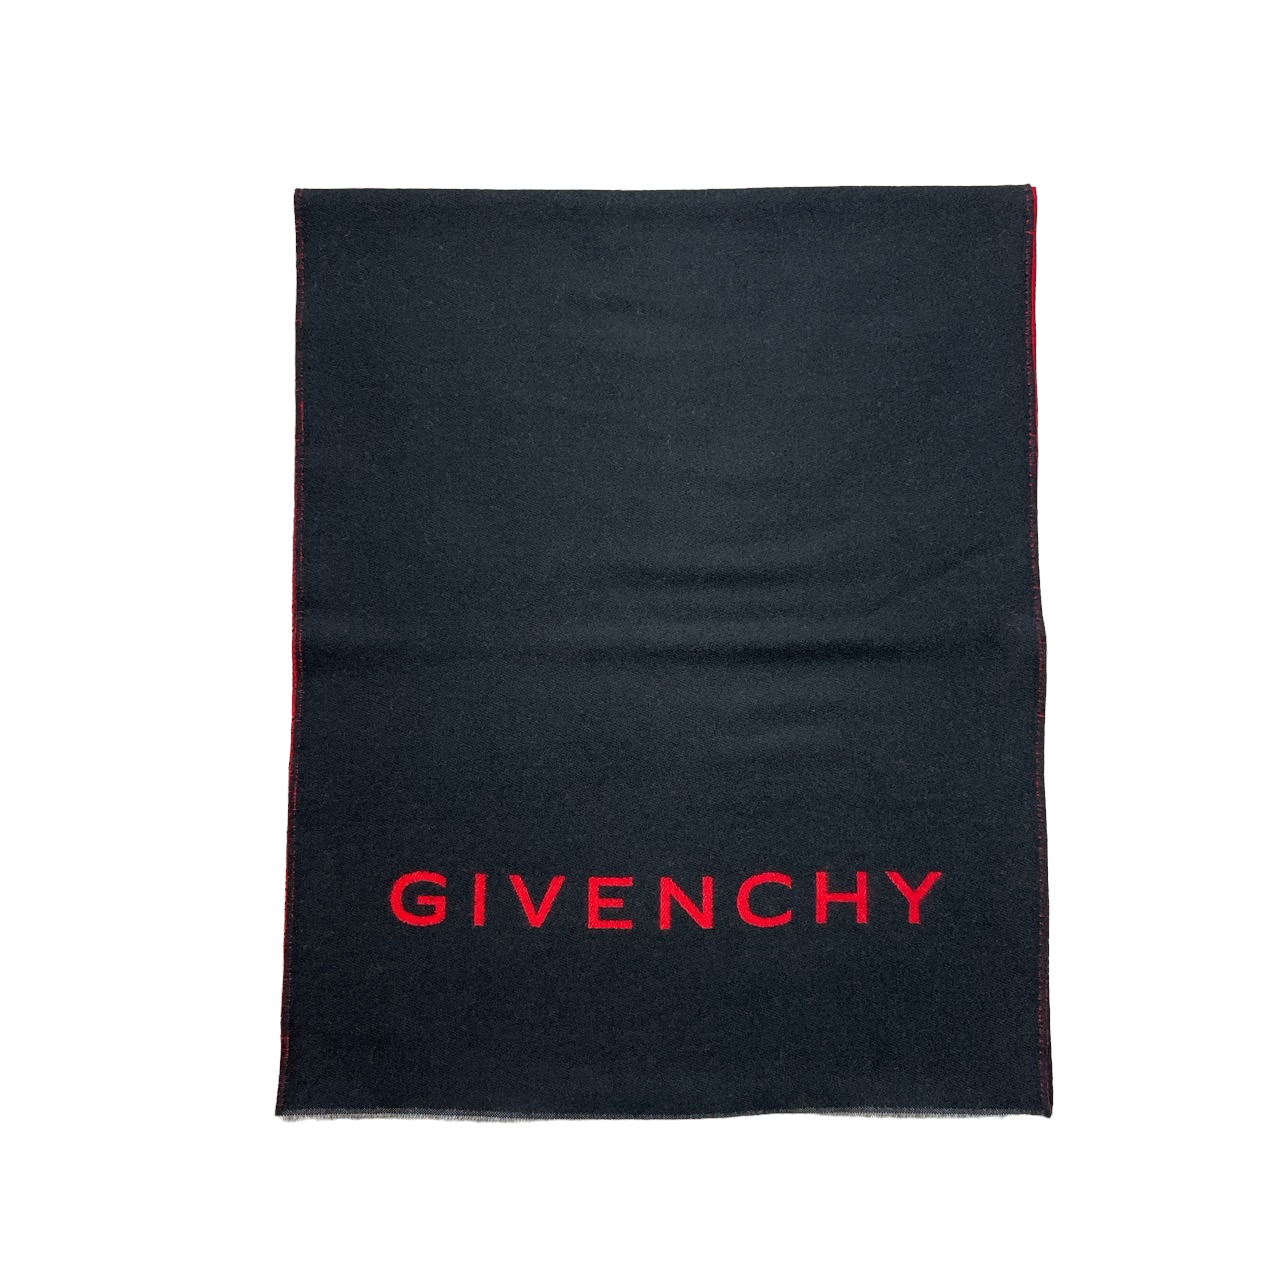 GIVENCHY PARIS 4G LOGO REVERSIBLE SCARF - BLACK / RED